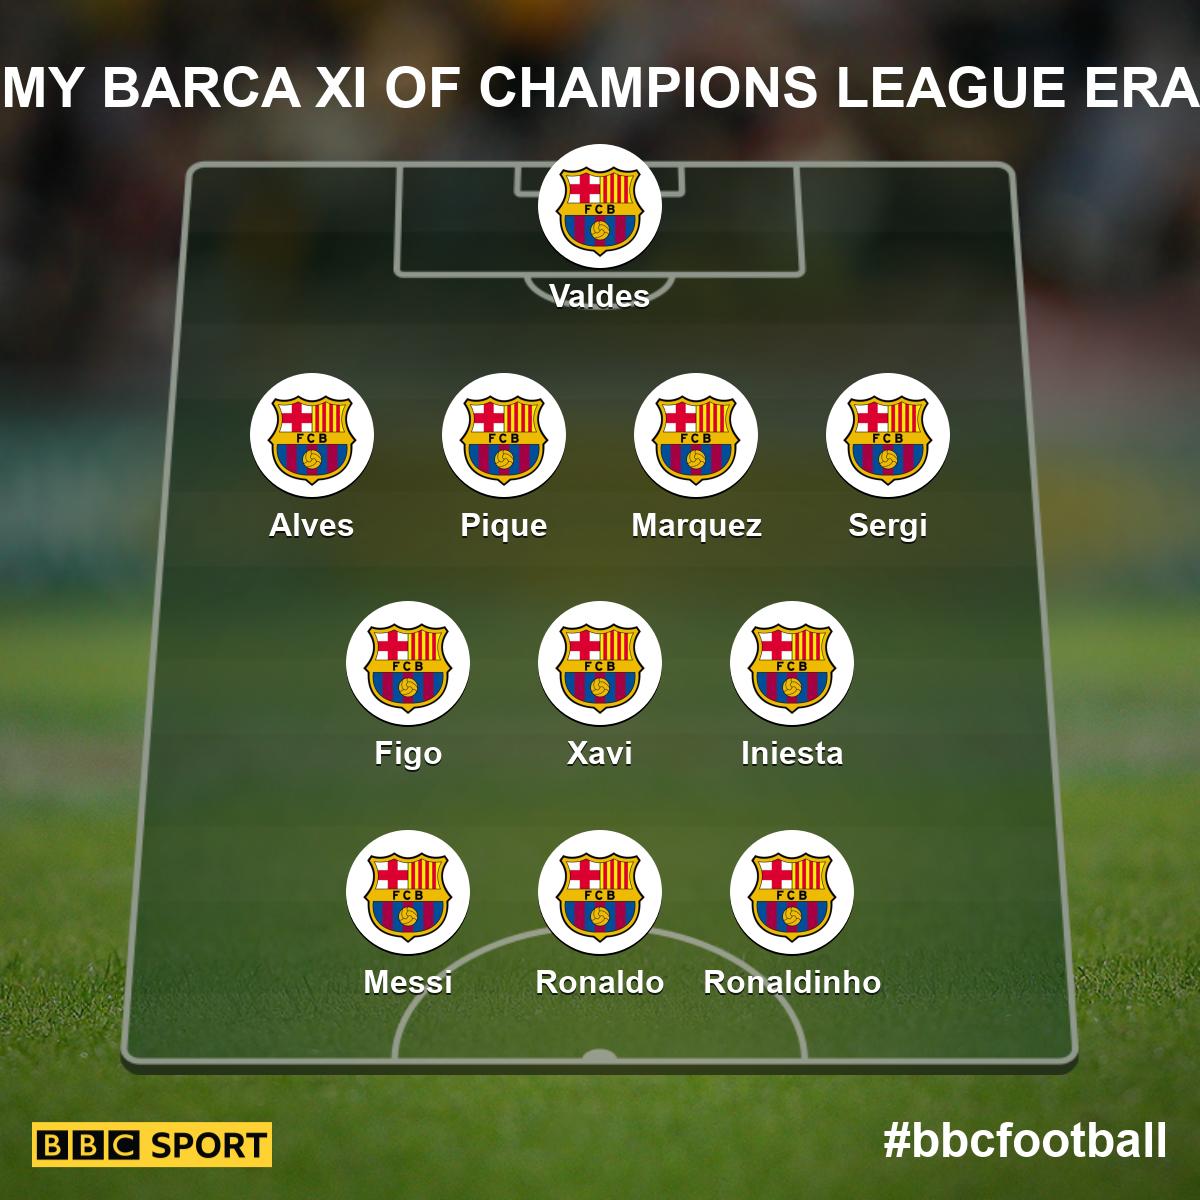 My Barca XI from the Champions League era 😜. #bbcfootball via @bbcsport